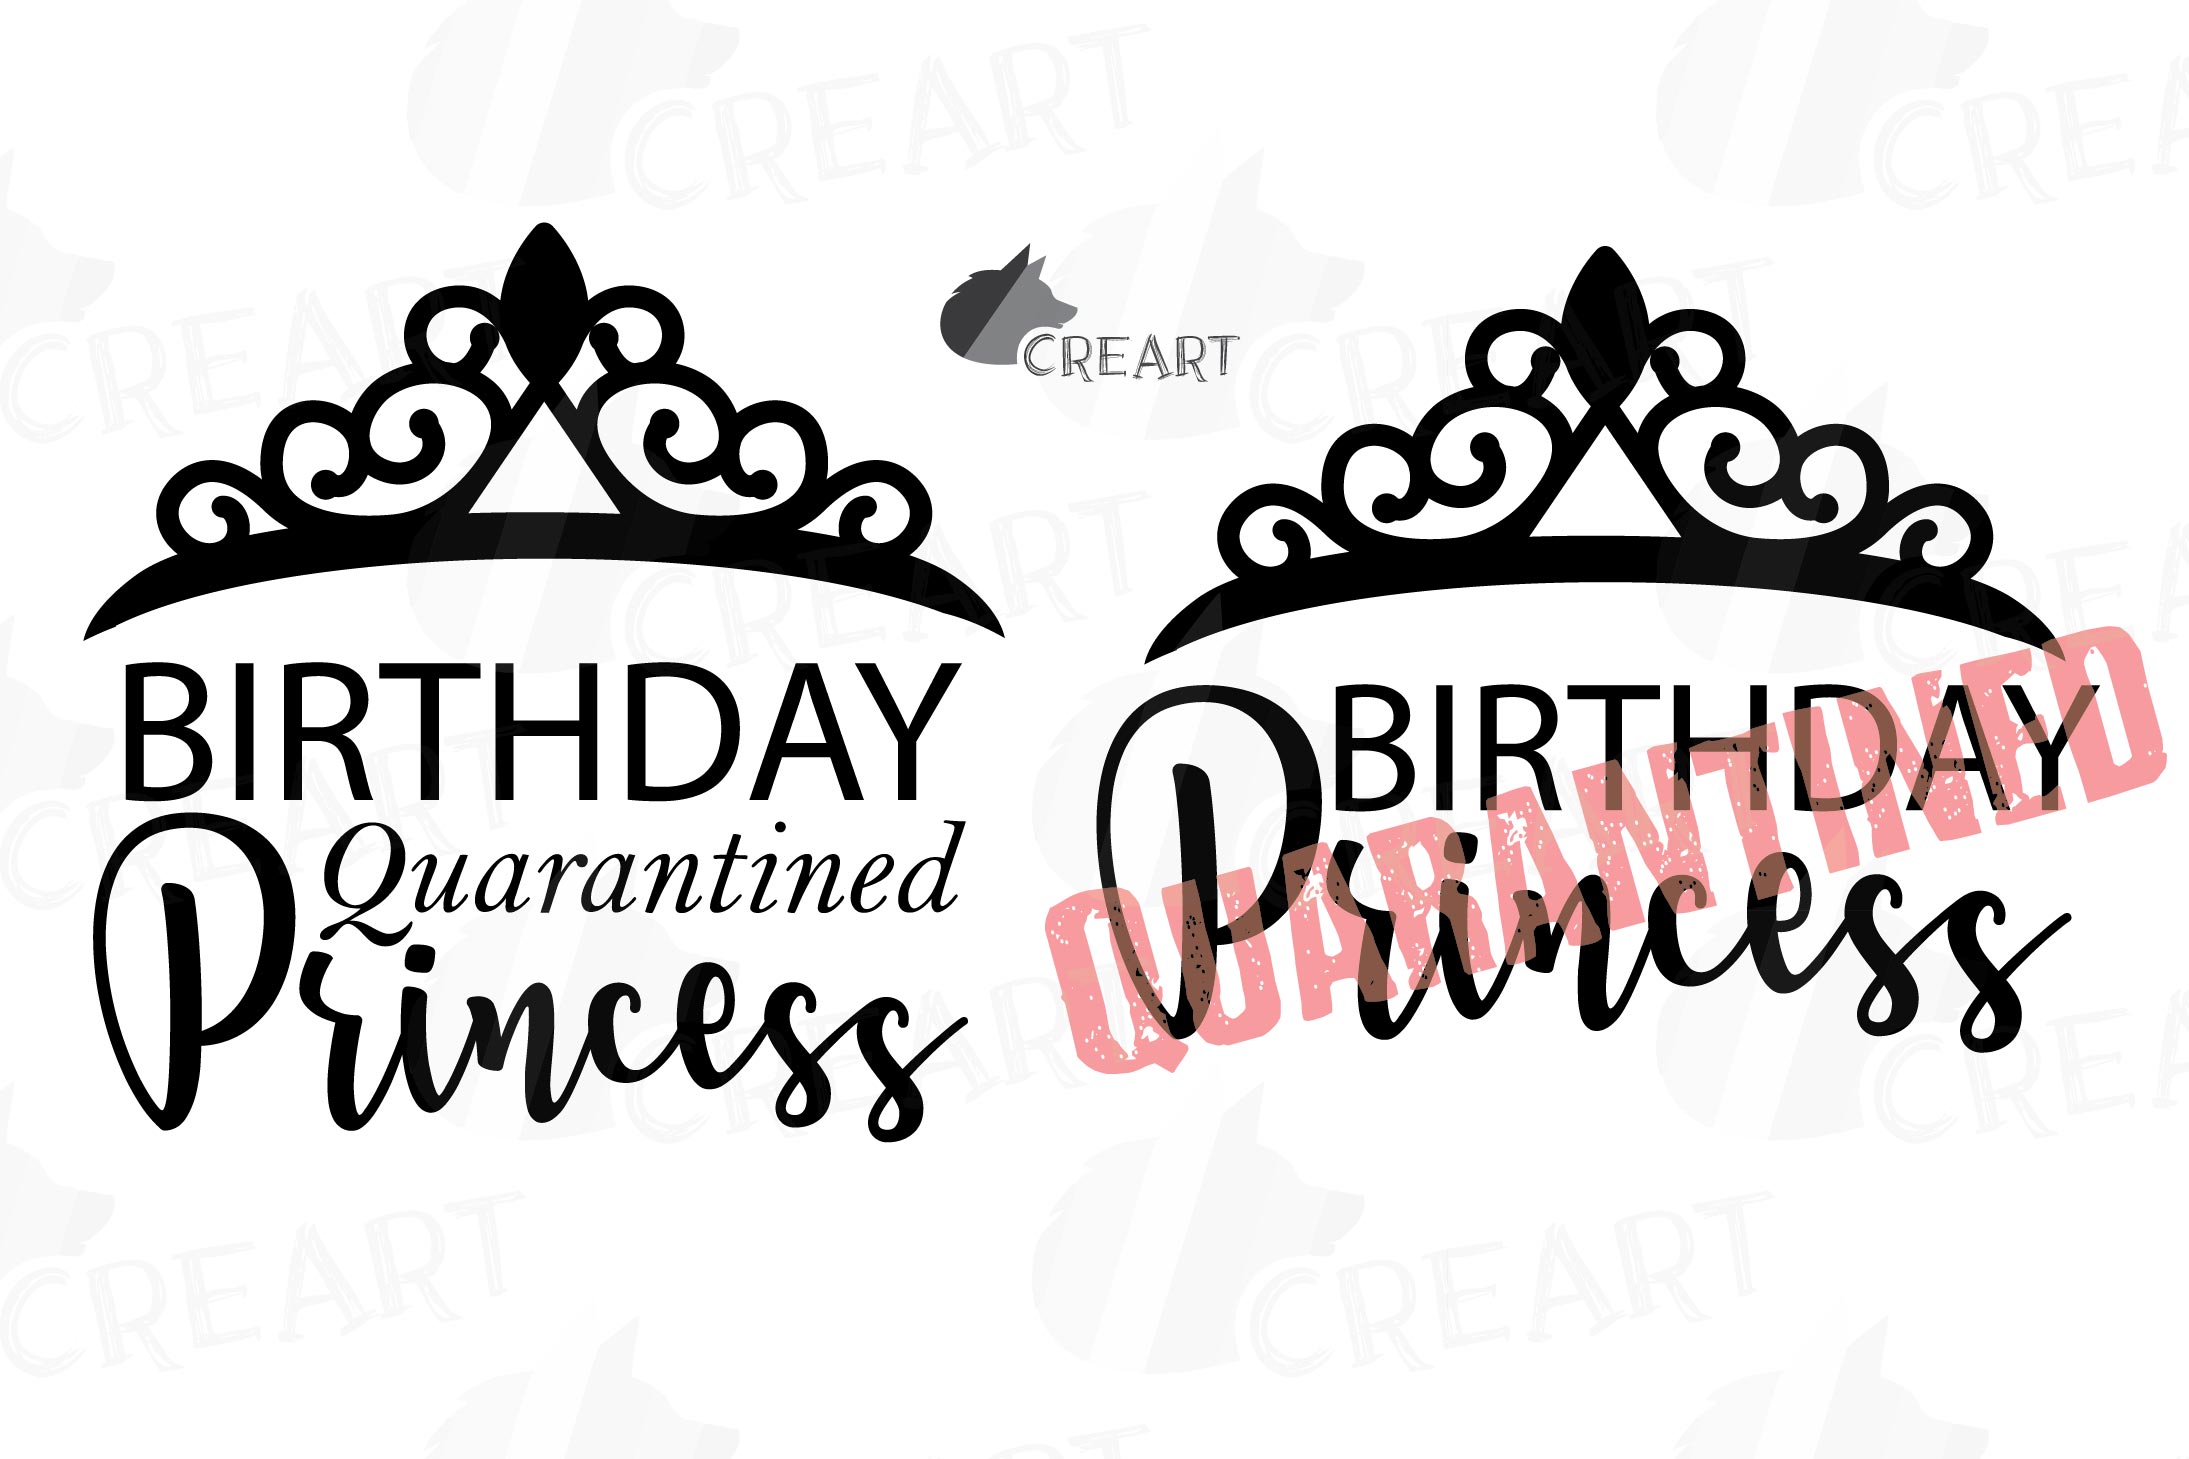 Quarantined Birthday Princess gift and decor cutting file.